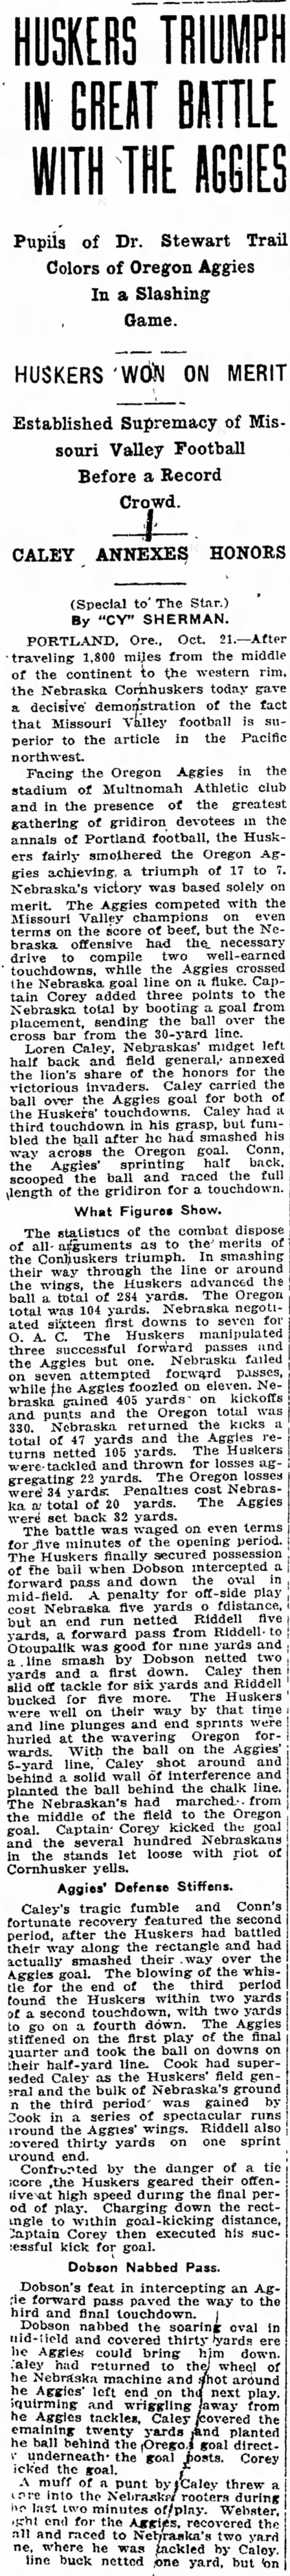 1916 Nebraska-Oregon State football - 